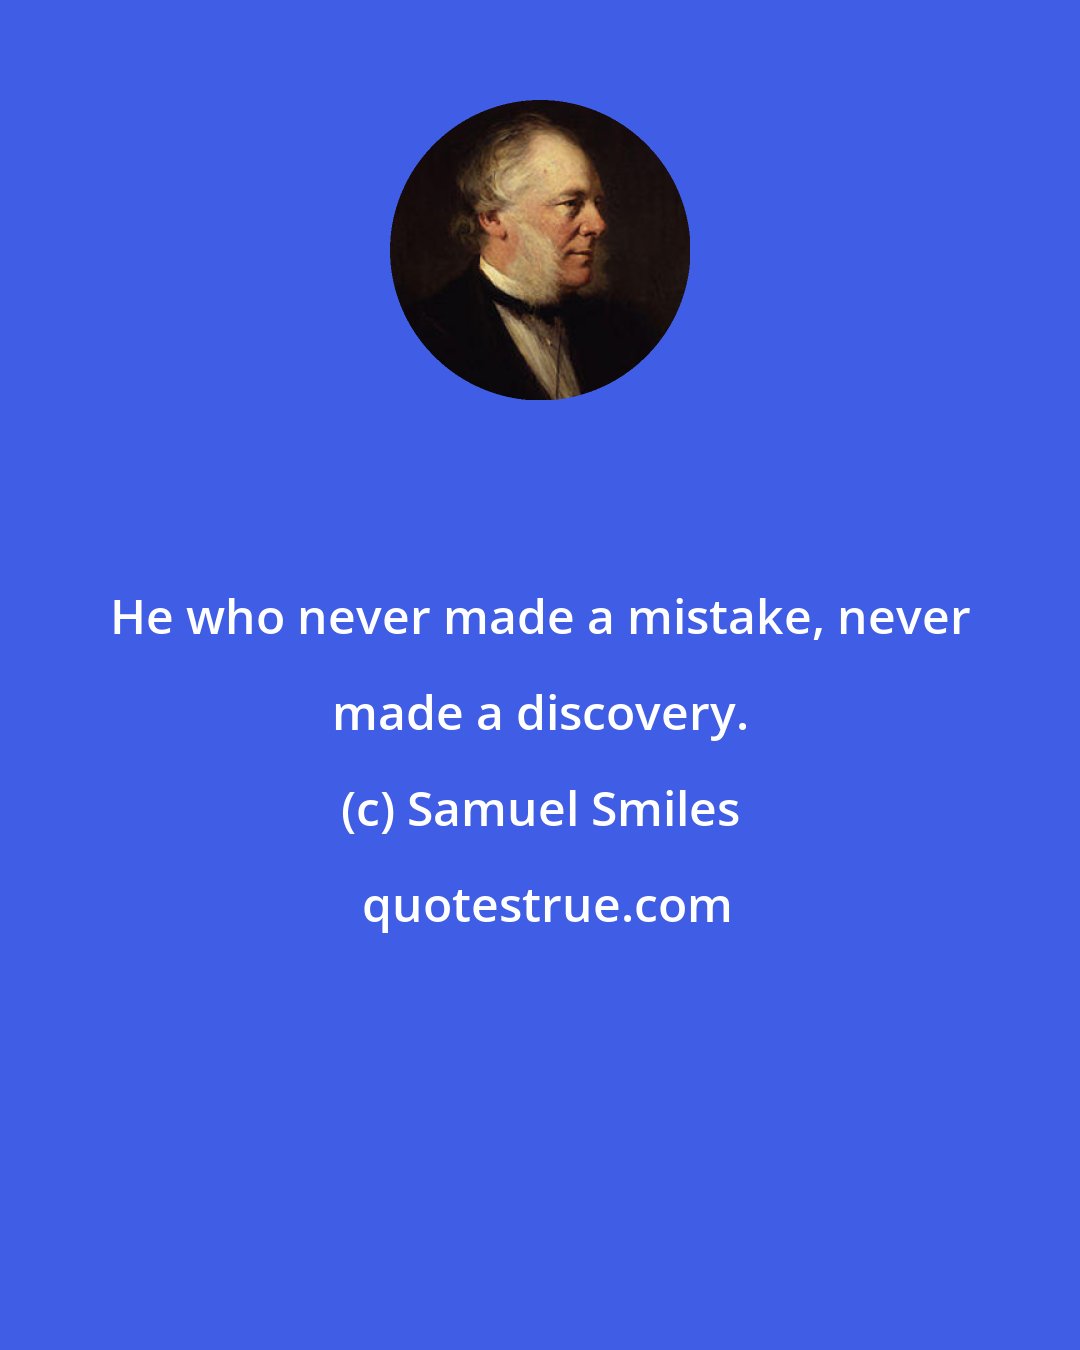 Samuel Smiles: He who never made a mistake, never made a discovery.